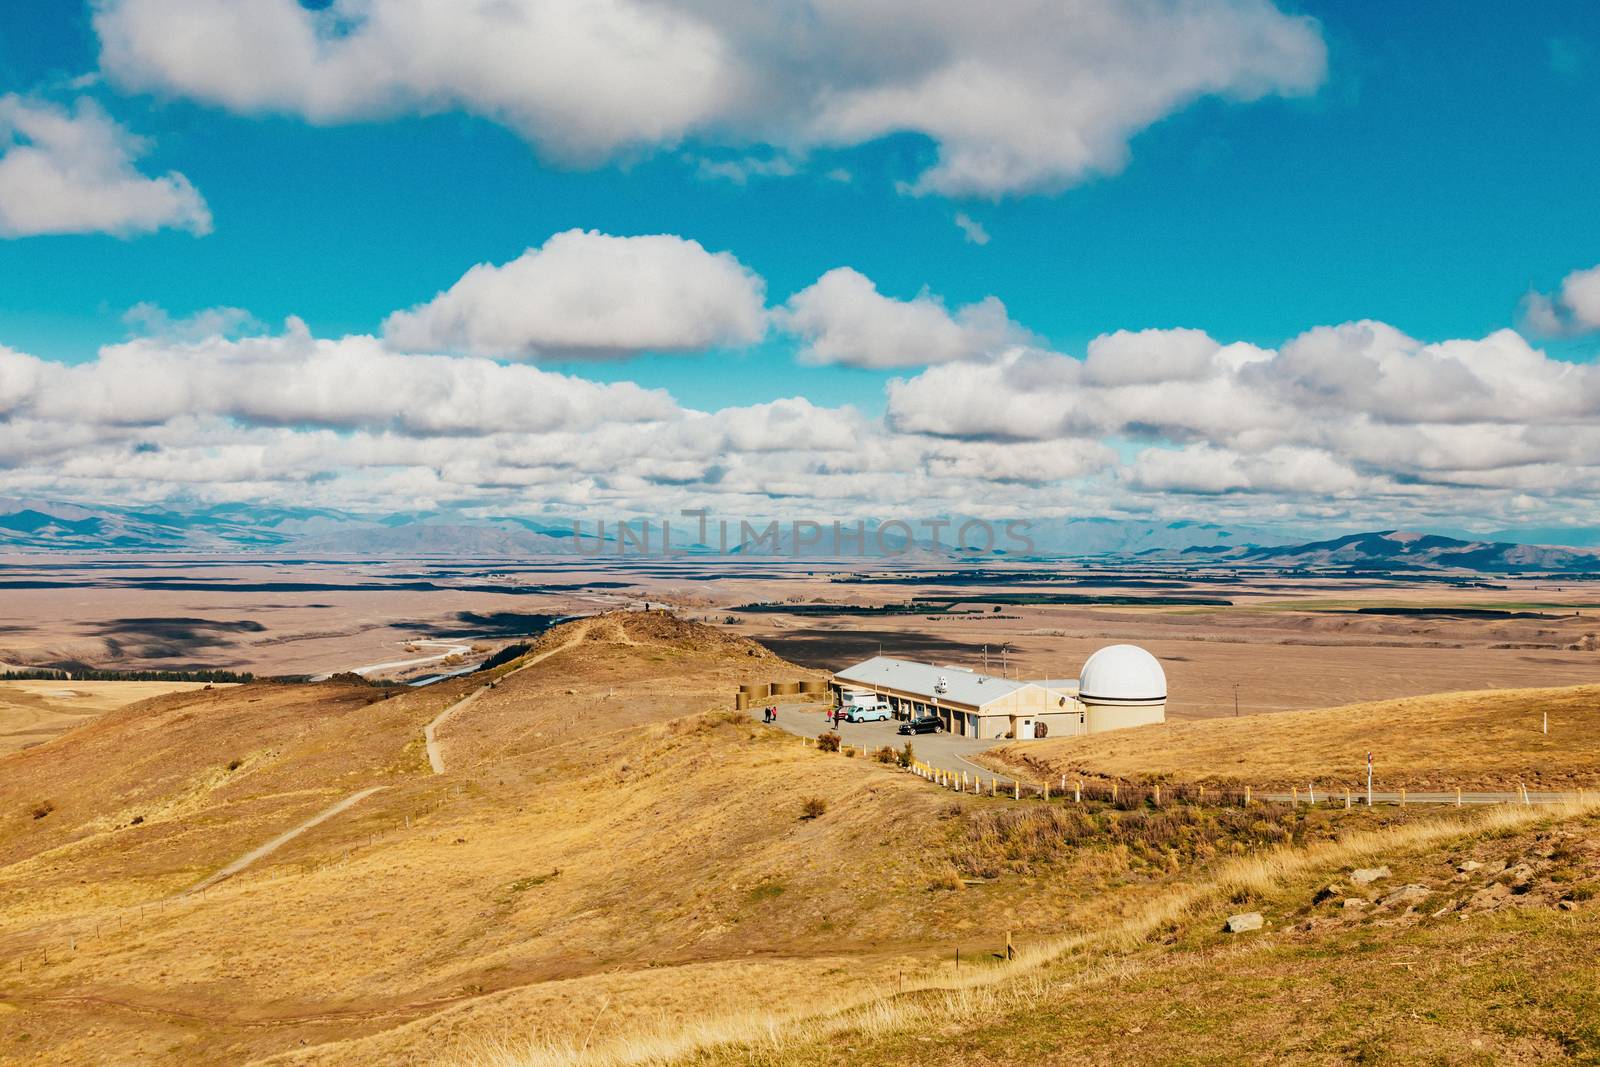 Mount John observatory at Lake Tekapo, south island New Zealand